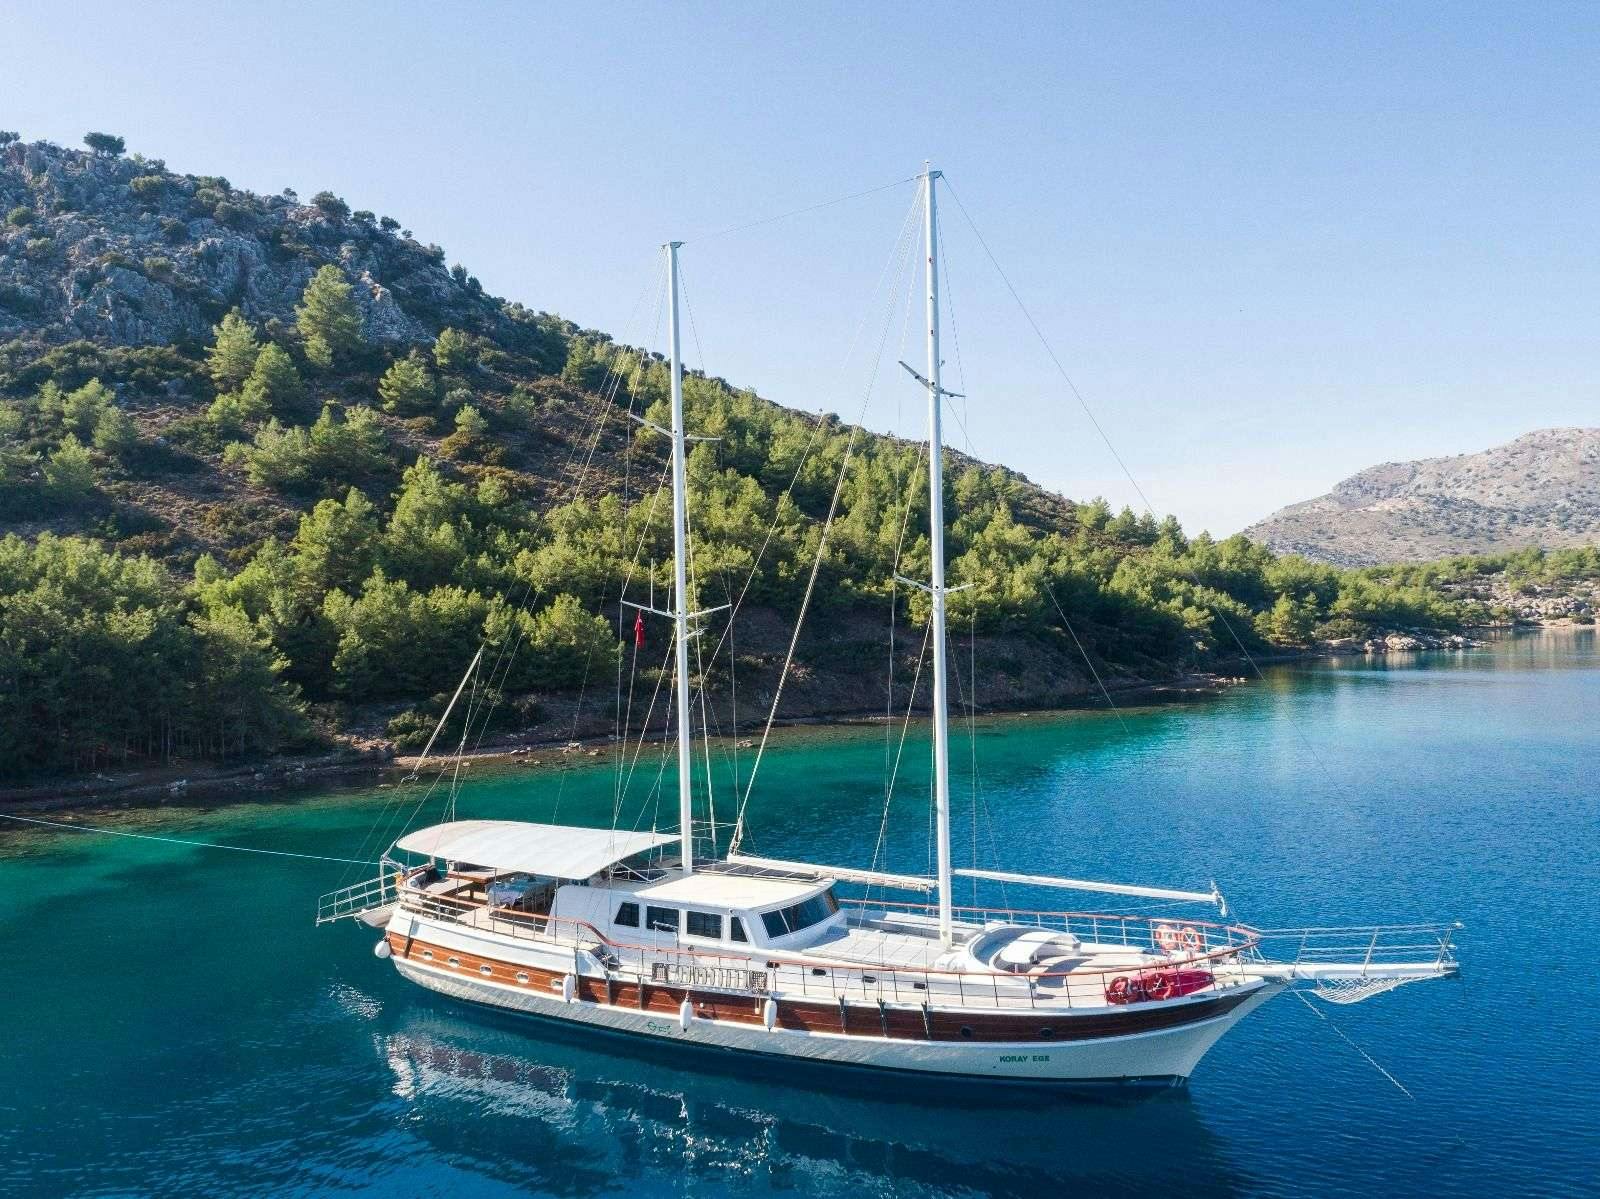 koray ege - Alimos Yacht Charter & Boat hire in Greece & Turkey 1